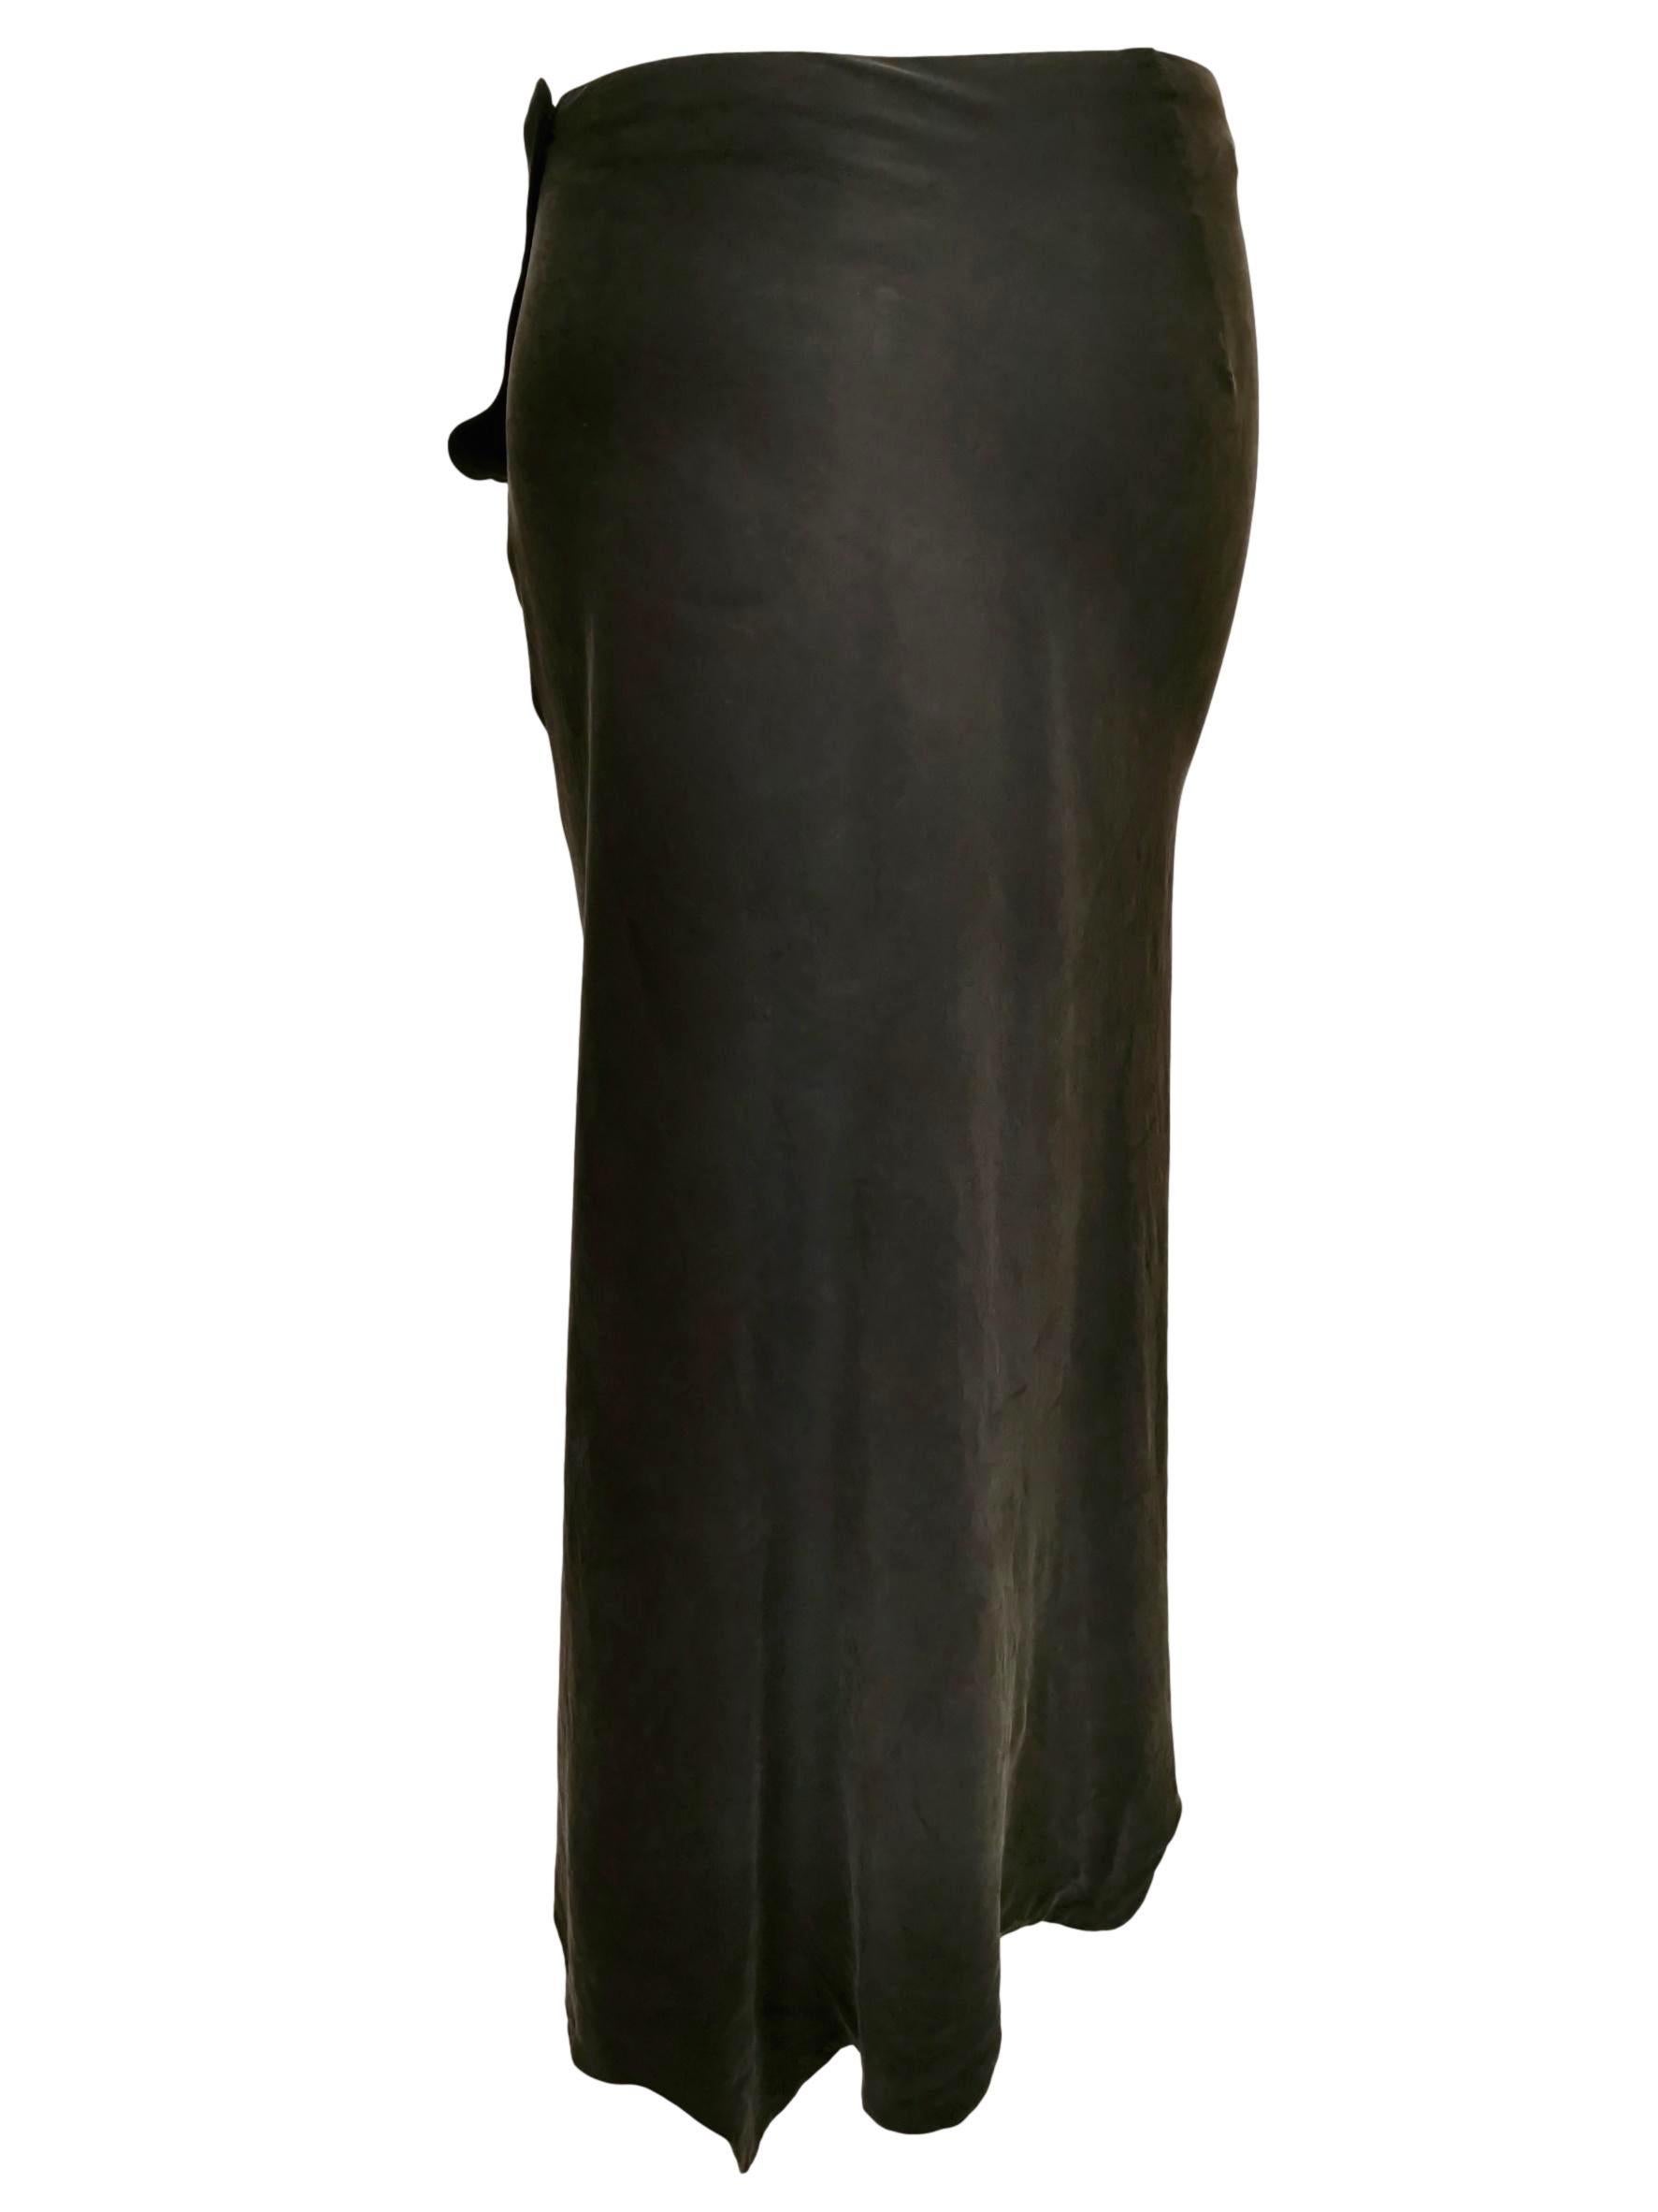 Yohji Yamamoto Silk Scallop Hem Skirt In Good Condition For Sale In Bath, GB